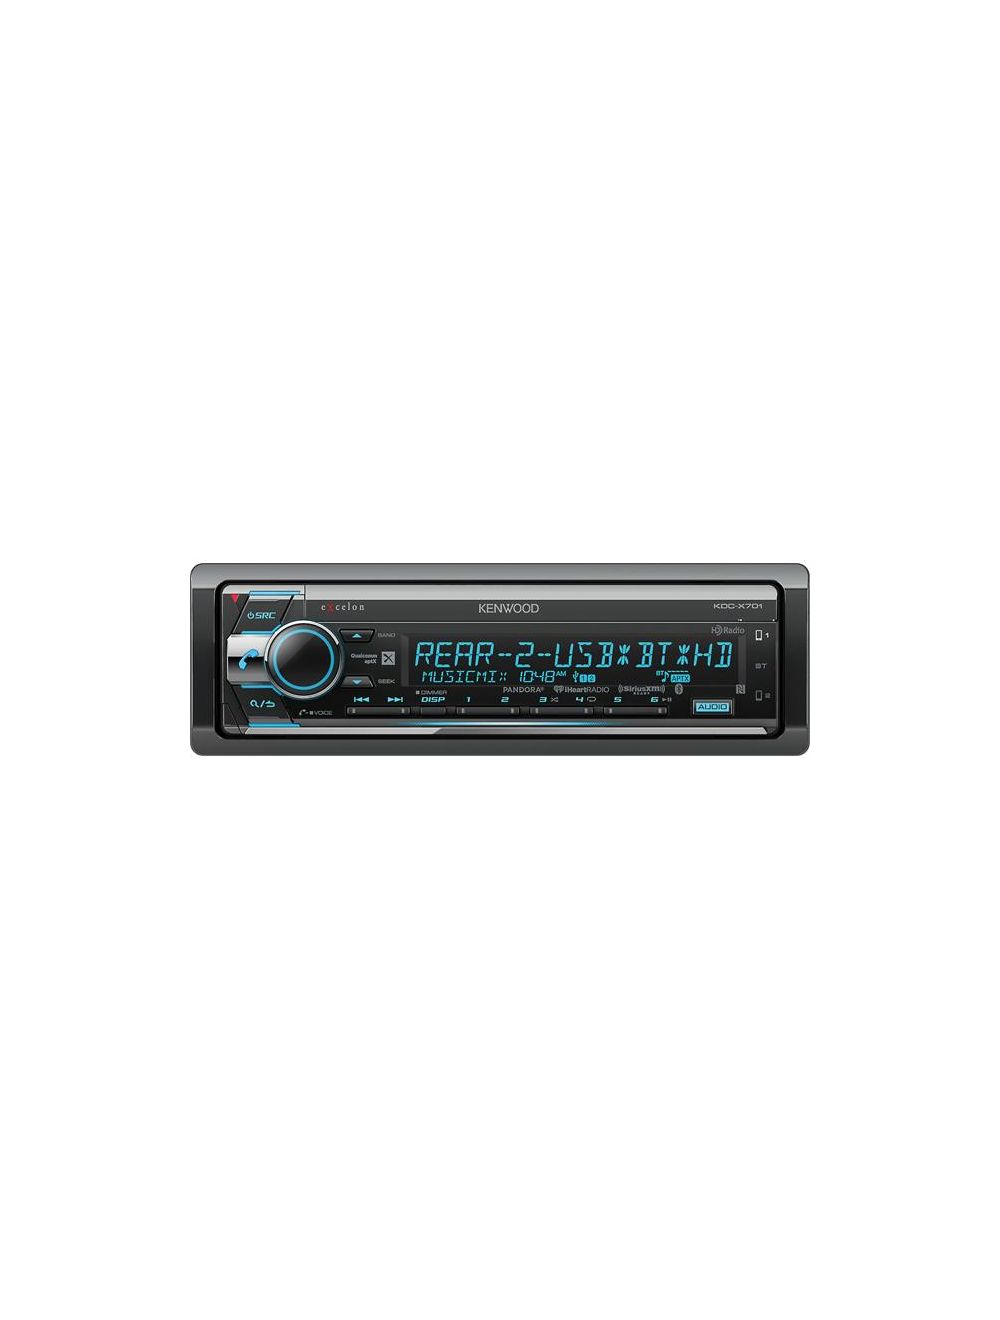 Kenwood Excelon KDC-X701 CD receiver